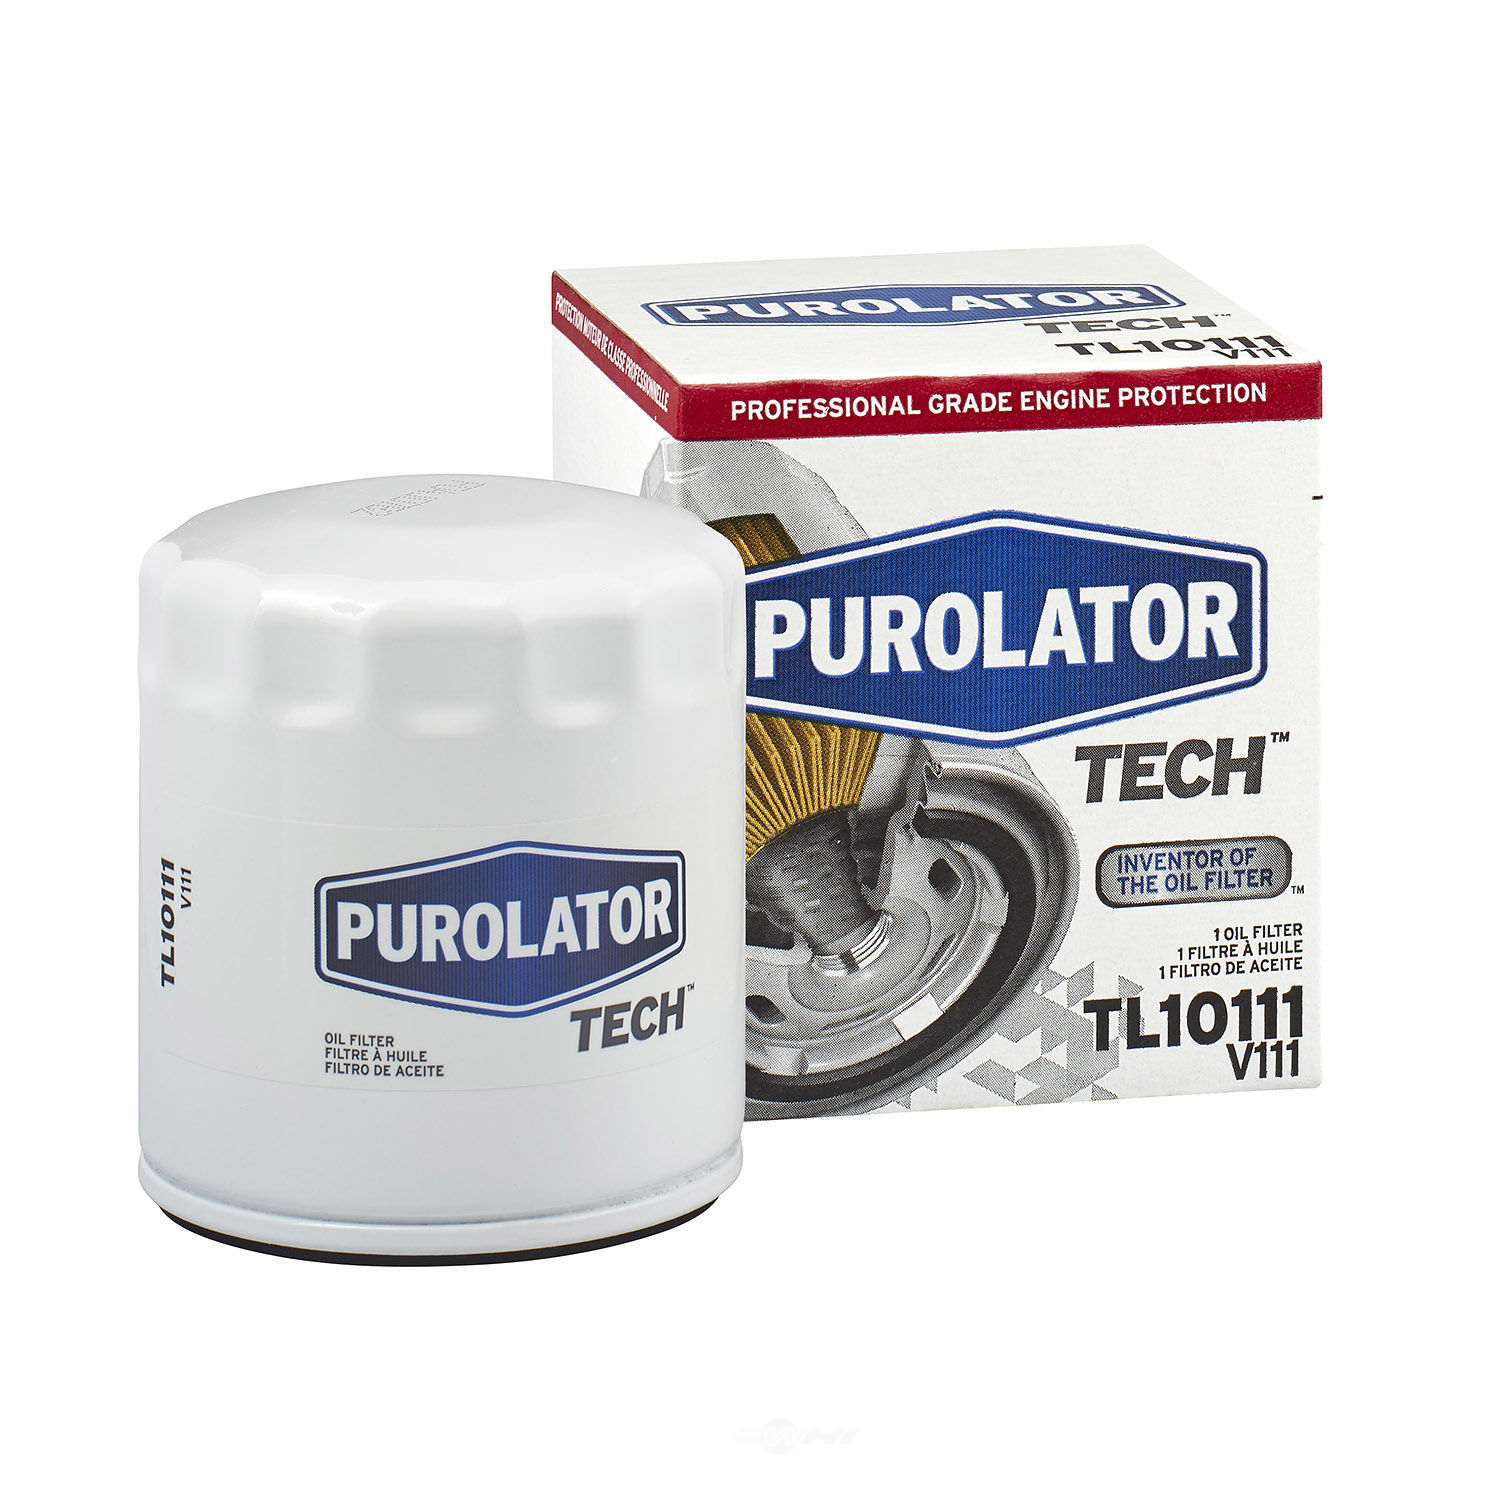 PUROLATOR - Purolator TECH - Professional Use - PUR TL10111